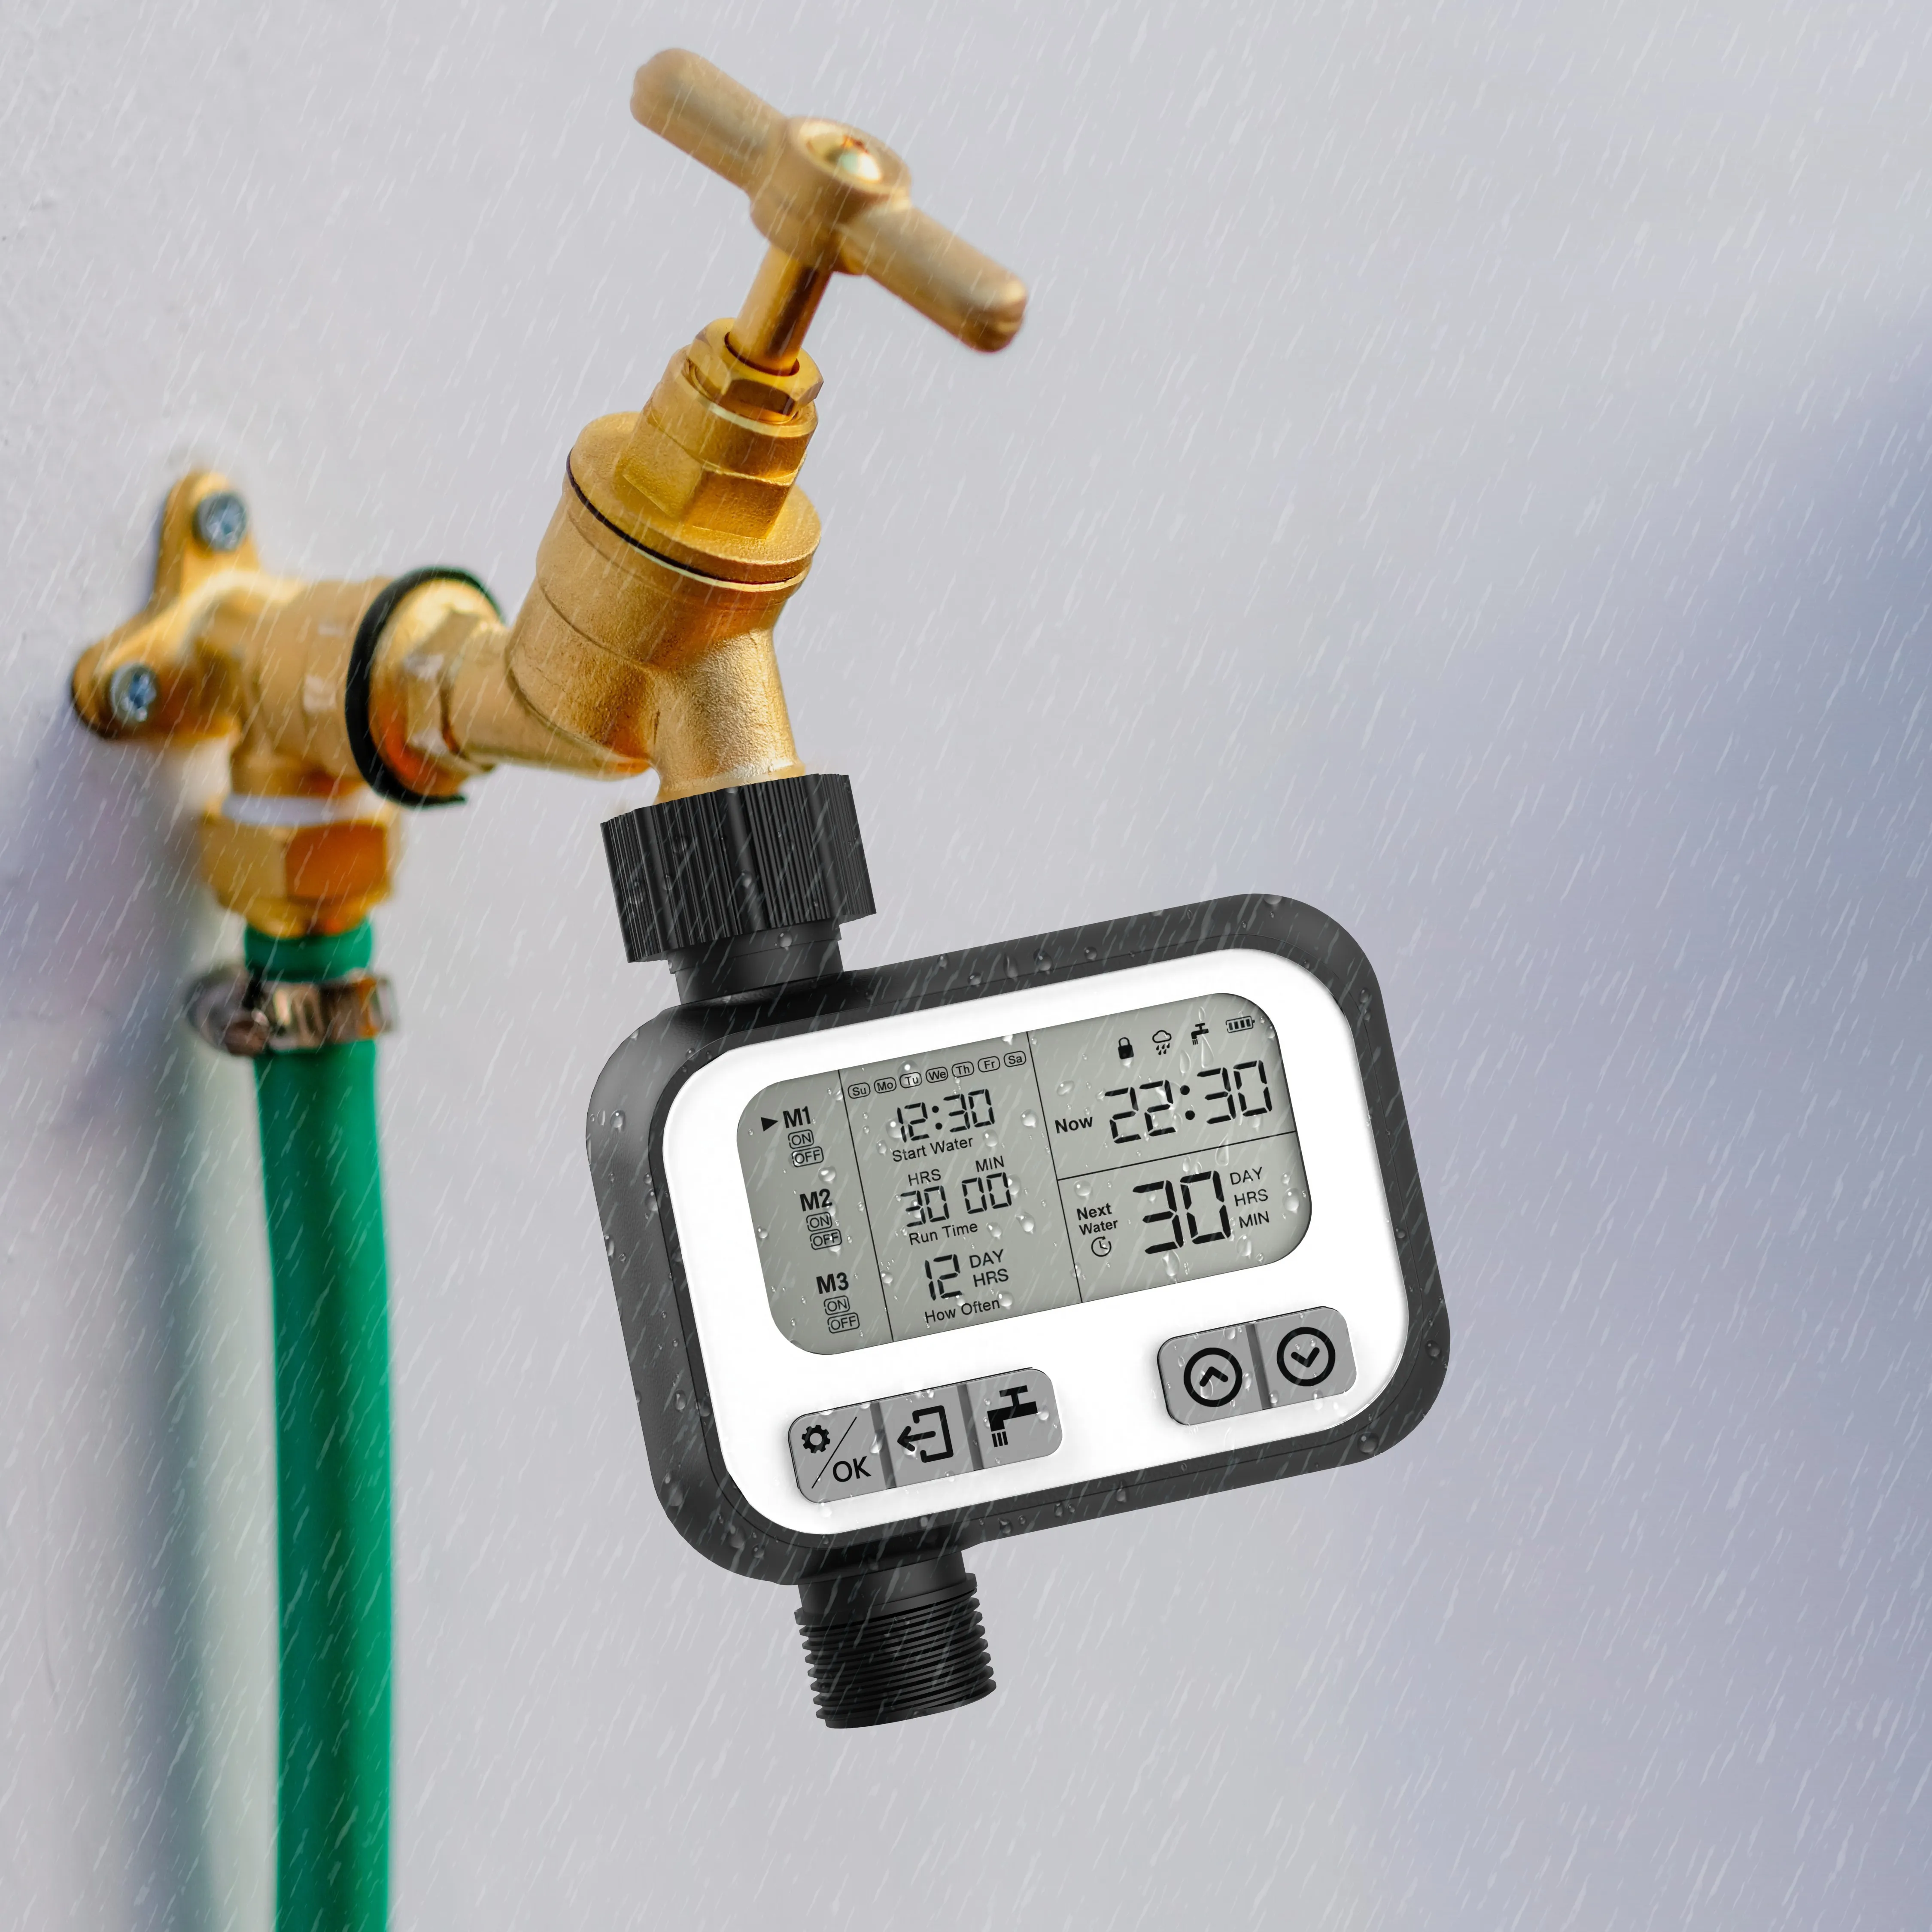 
Automatic watering timer digital garden water pump controller  (1600160373548)